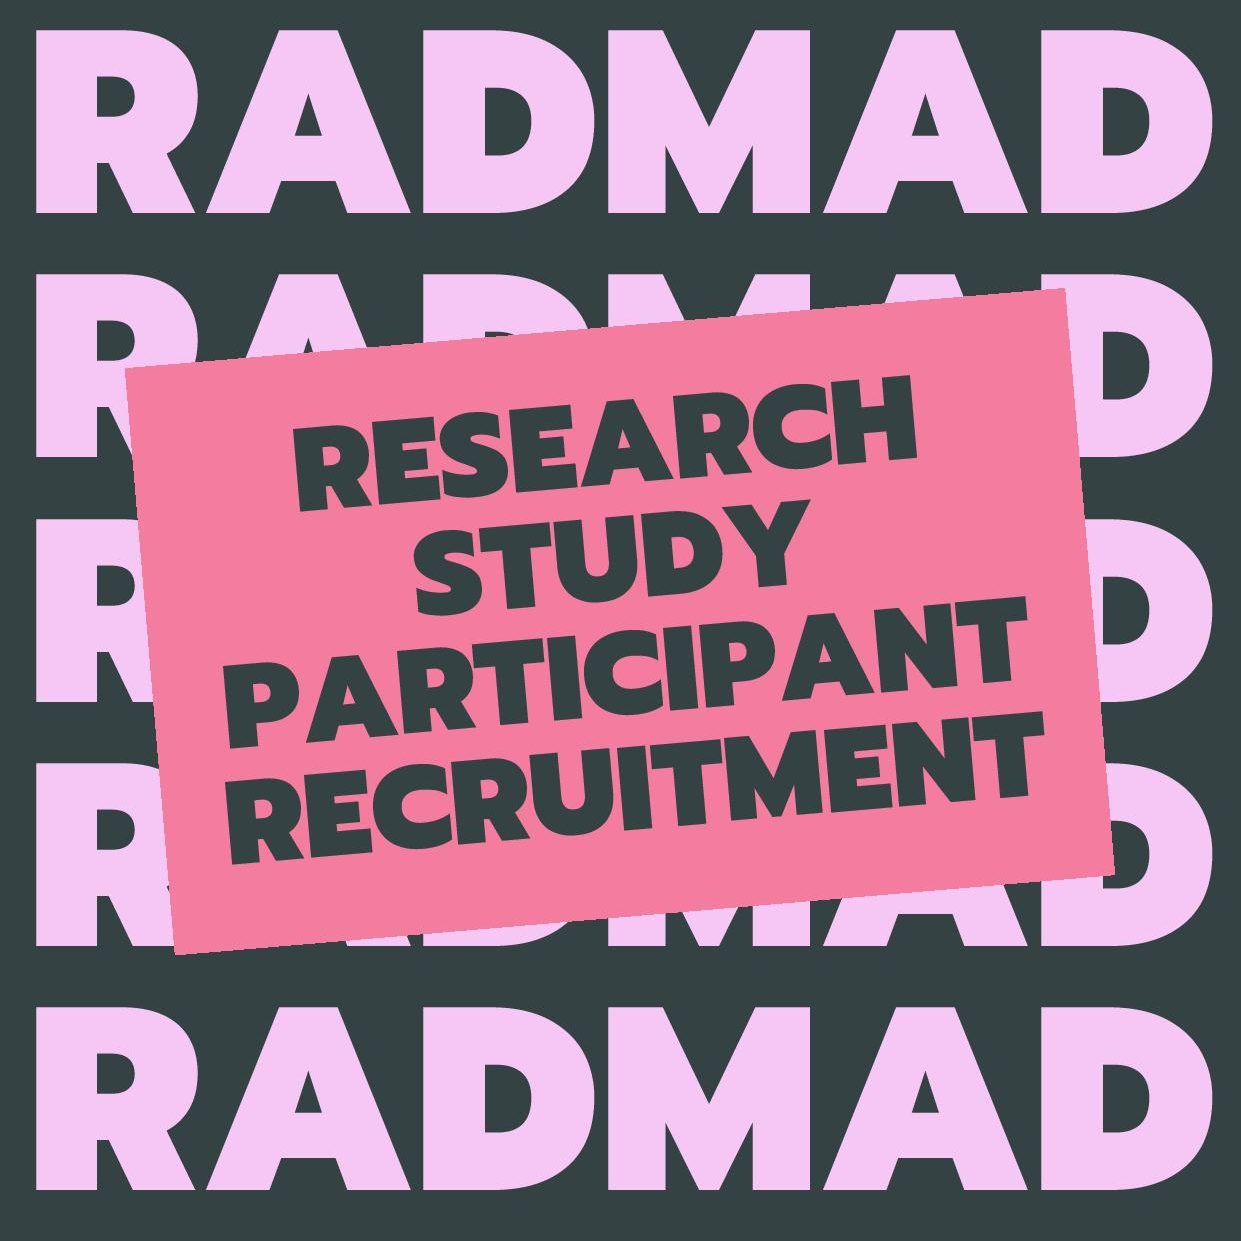 Research Study Participant Recruitment